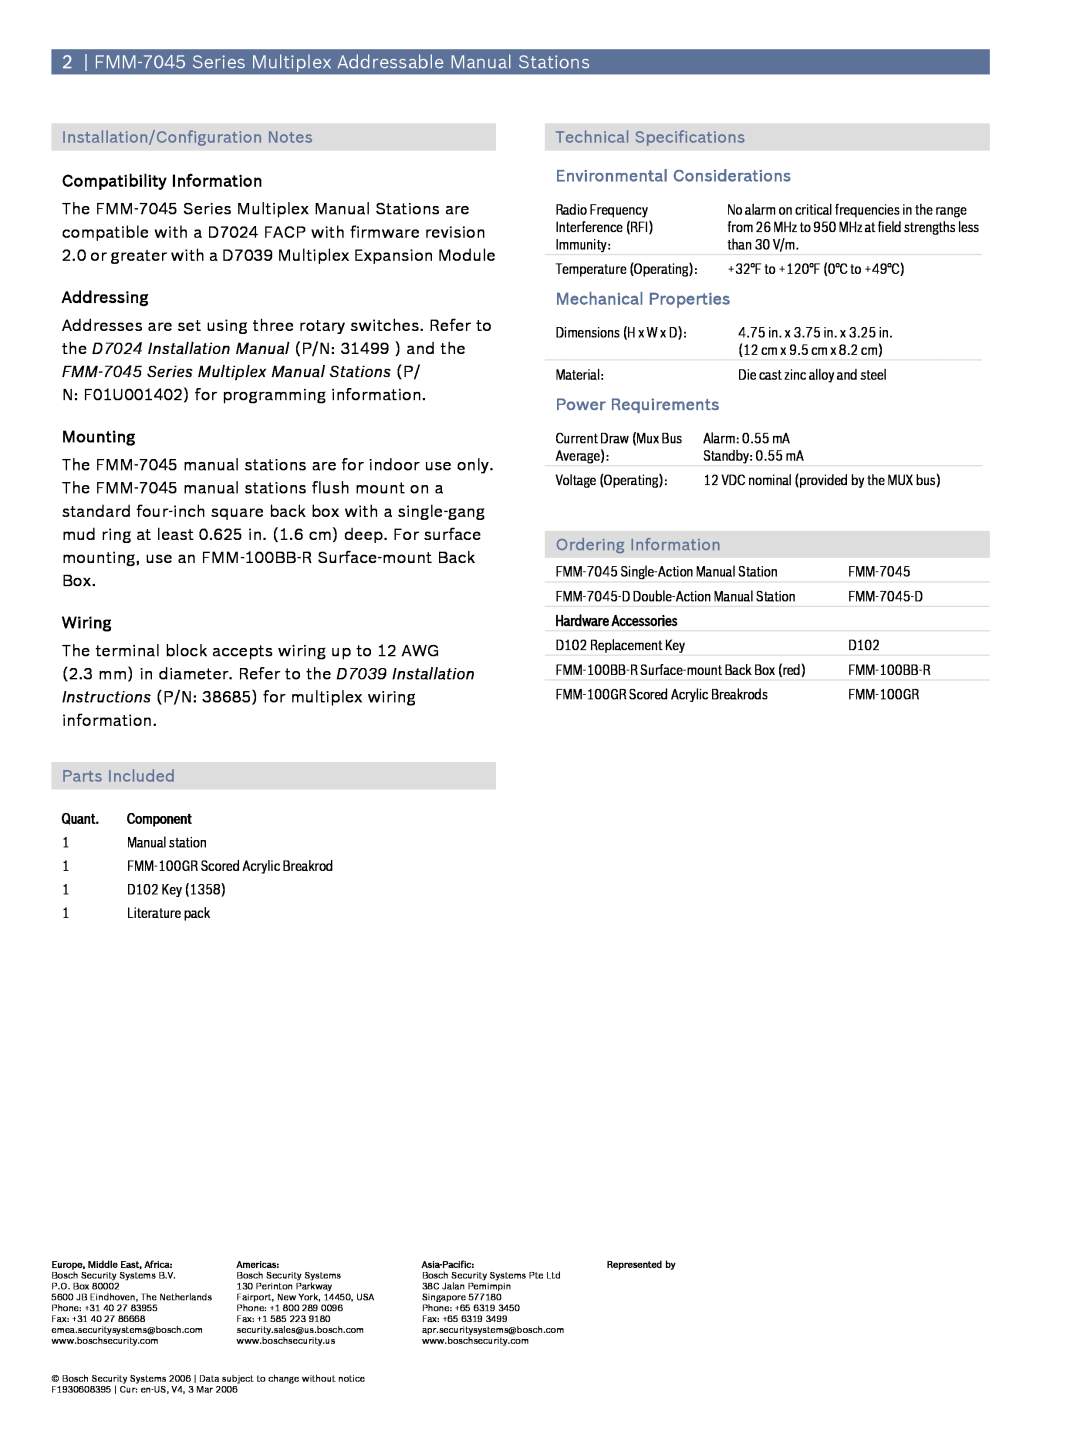 Bosch Appliances FMM-7045 Series Multiplex Addressable Manual Stations, Installation/Configuration Notes, Addressing 